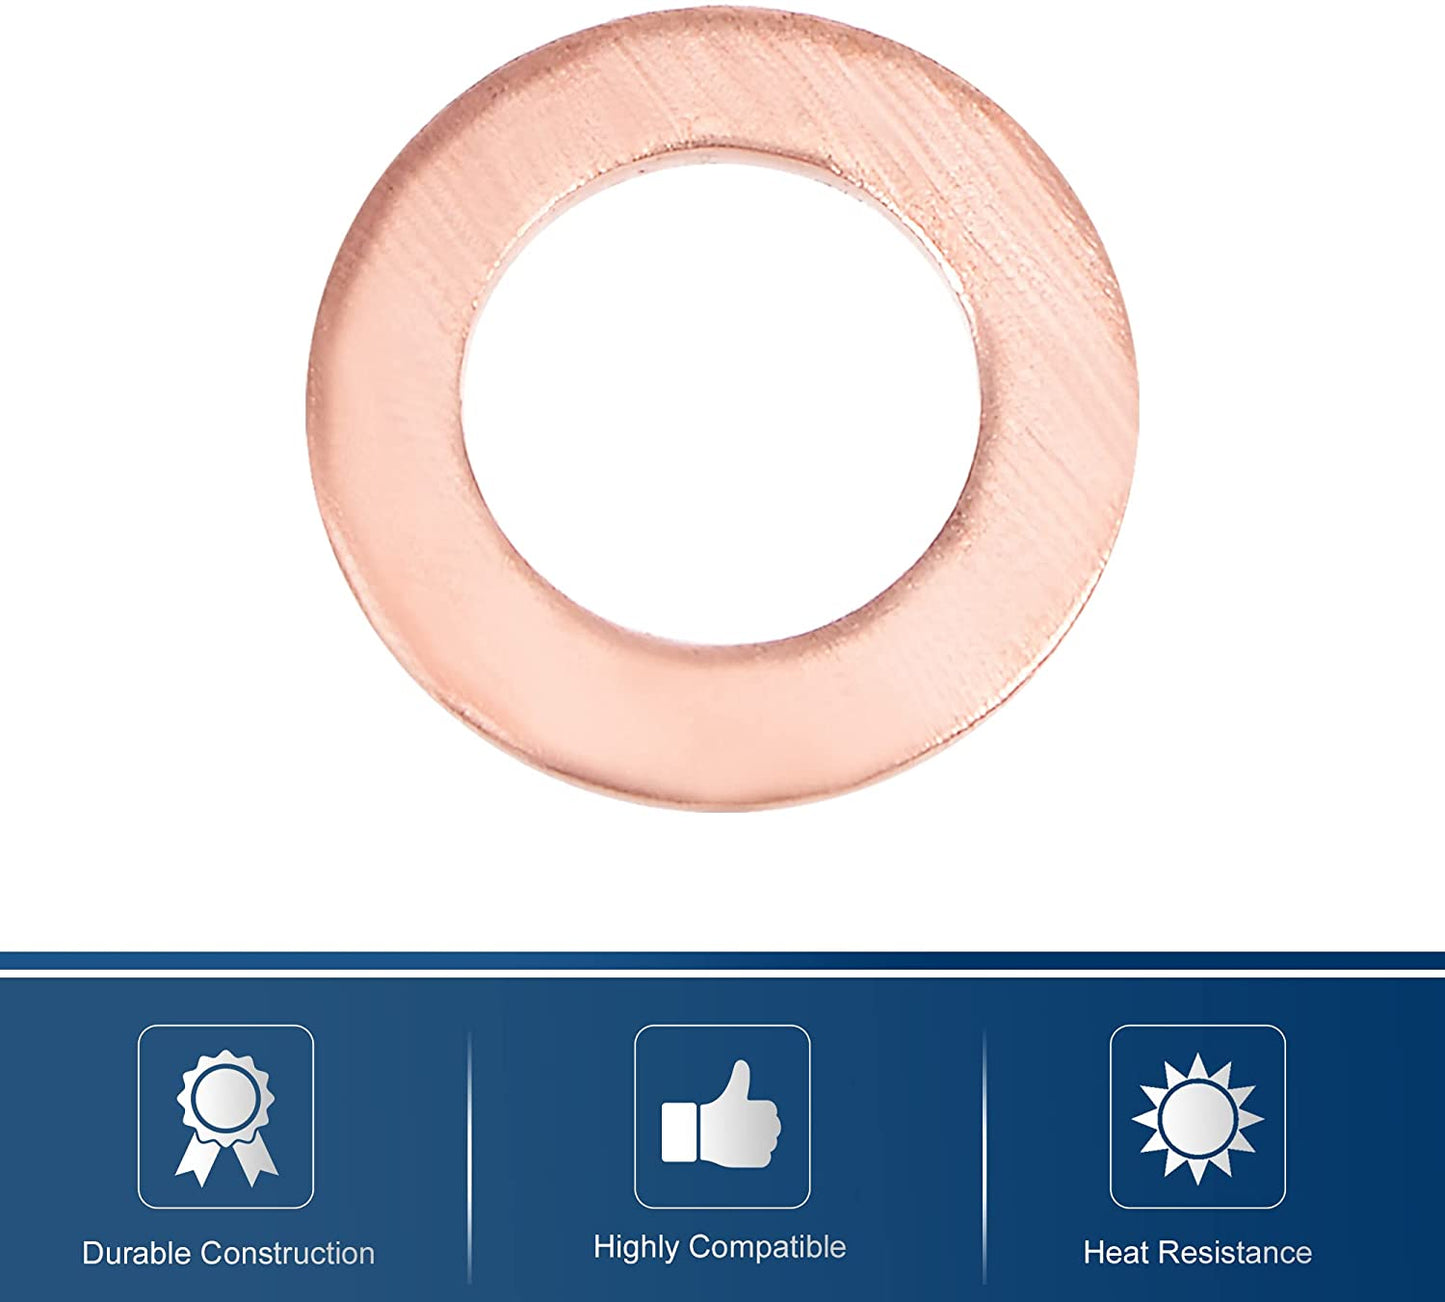 500pcs Metric M6x10x1mm Copper Flat Washer Sealing Ring for Screw Bolt Nut